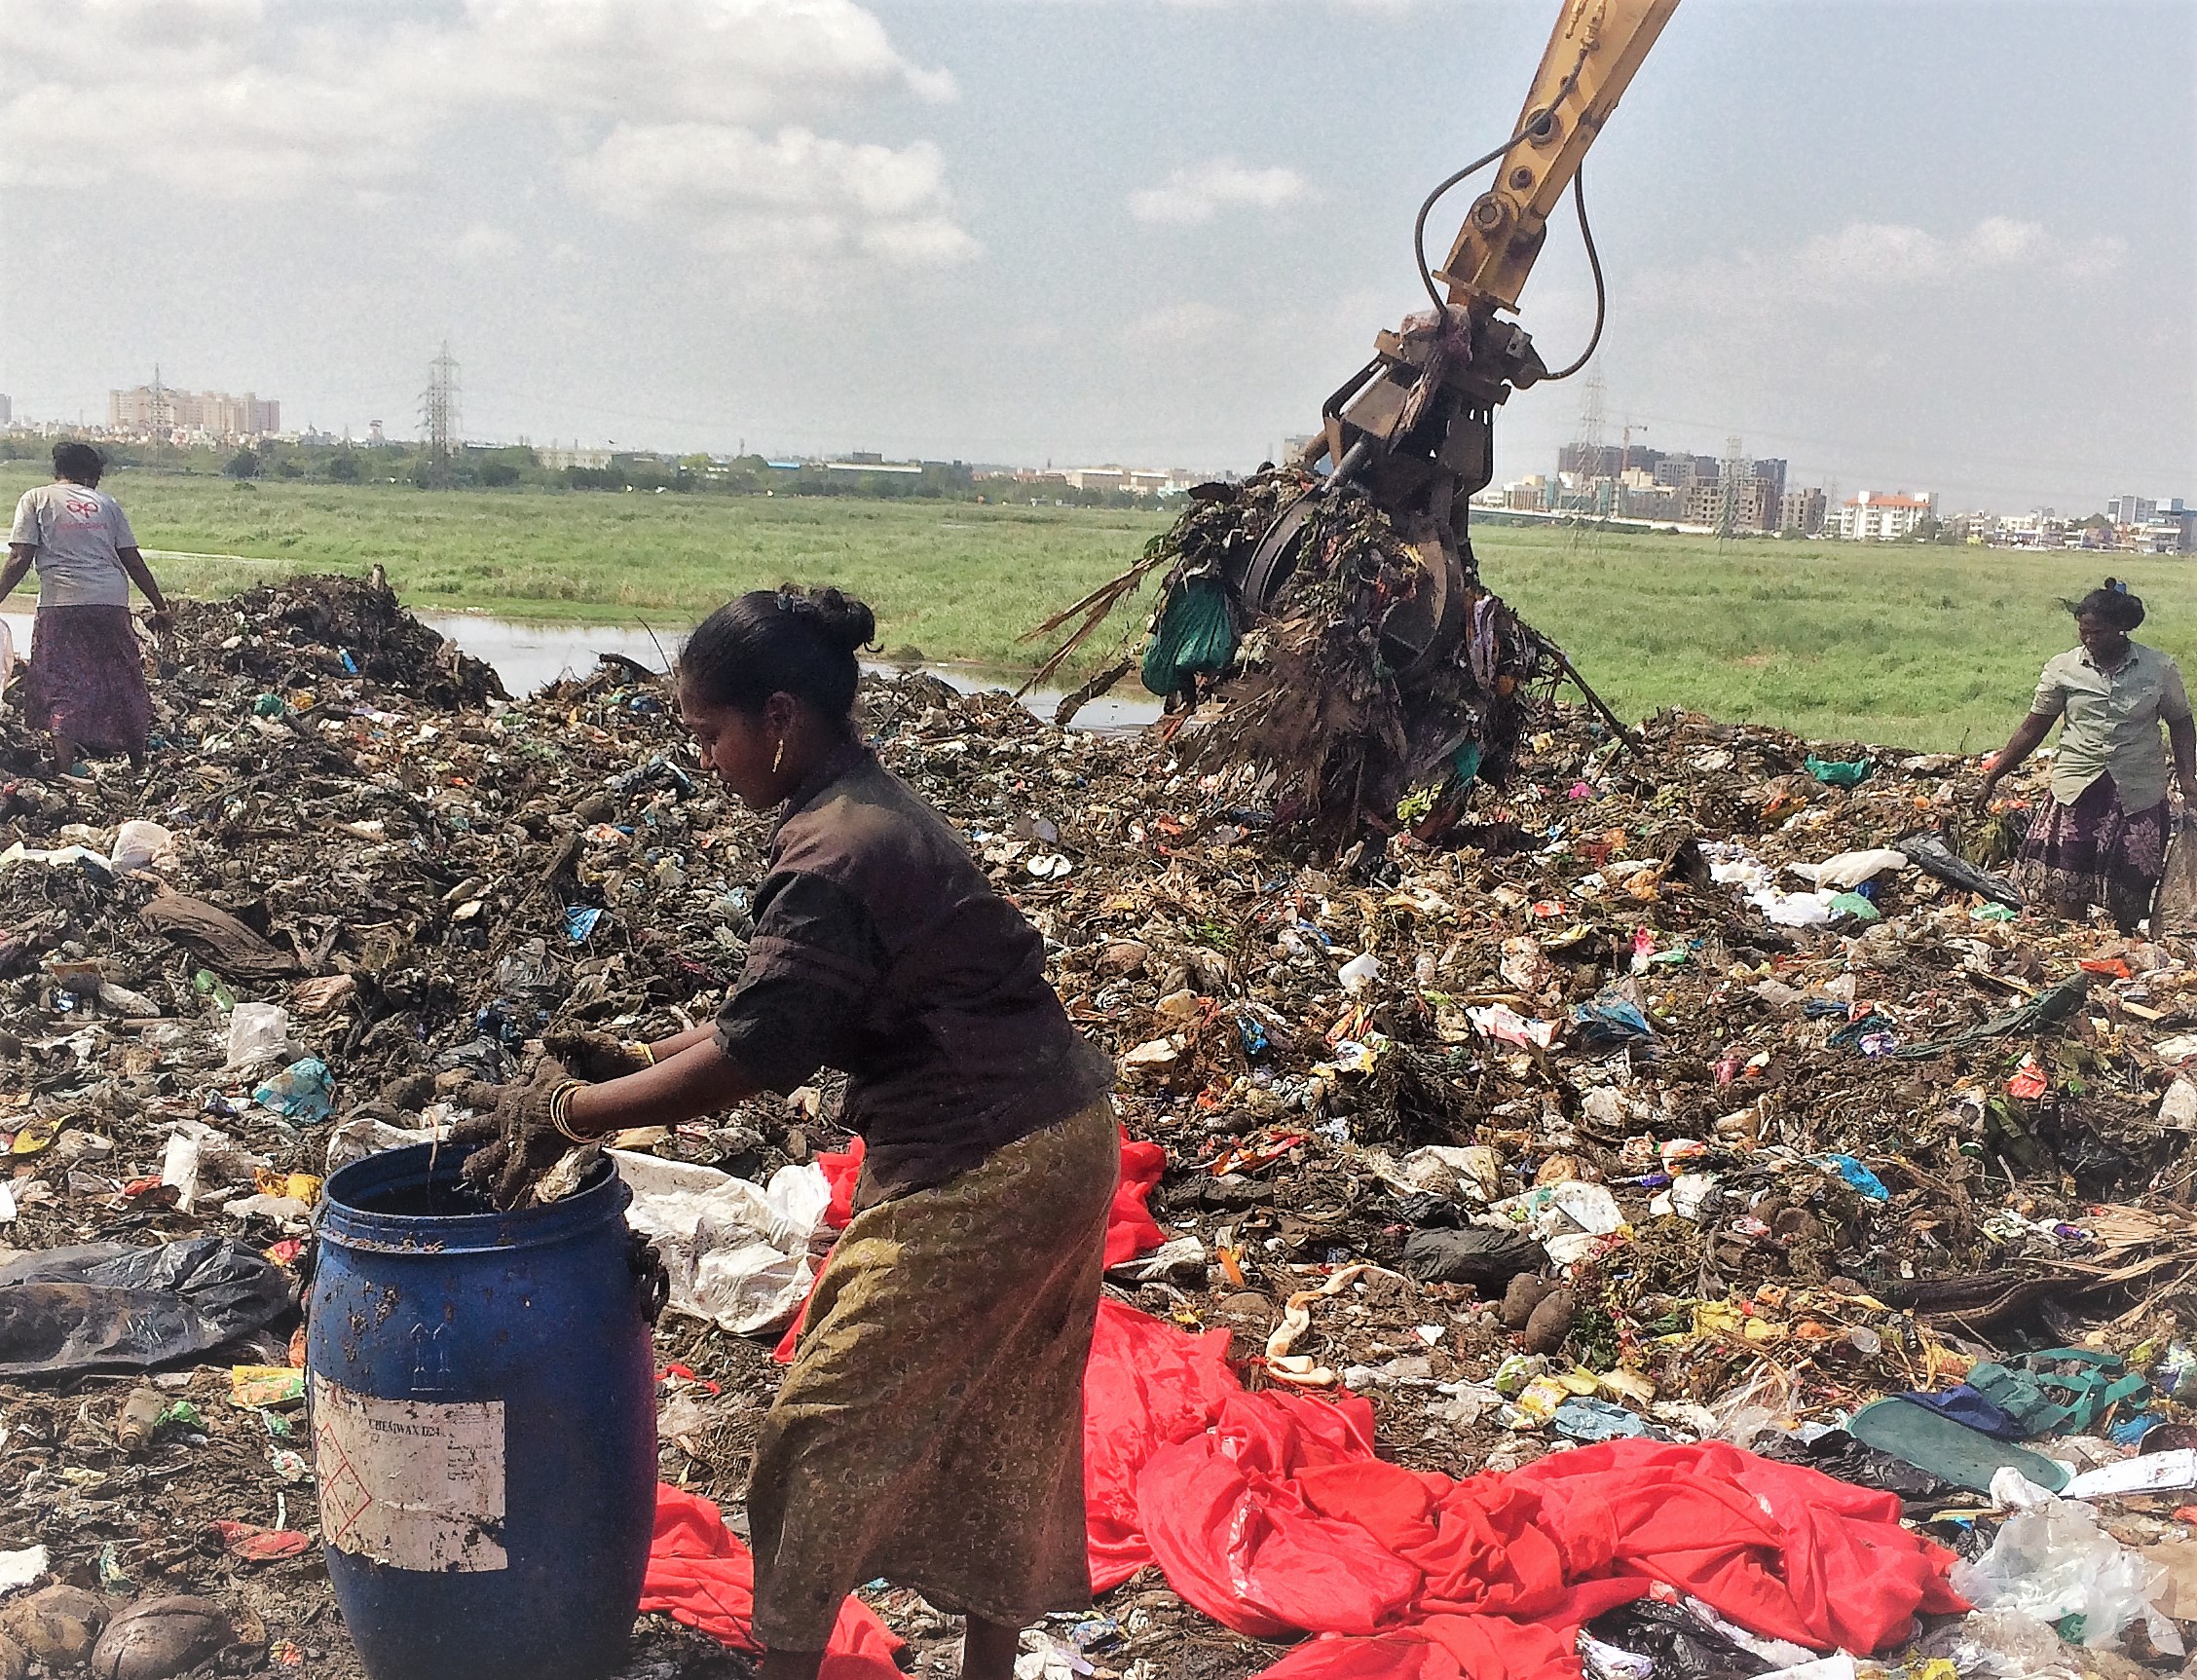 An open garbage dump in Chennai, India